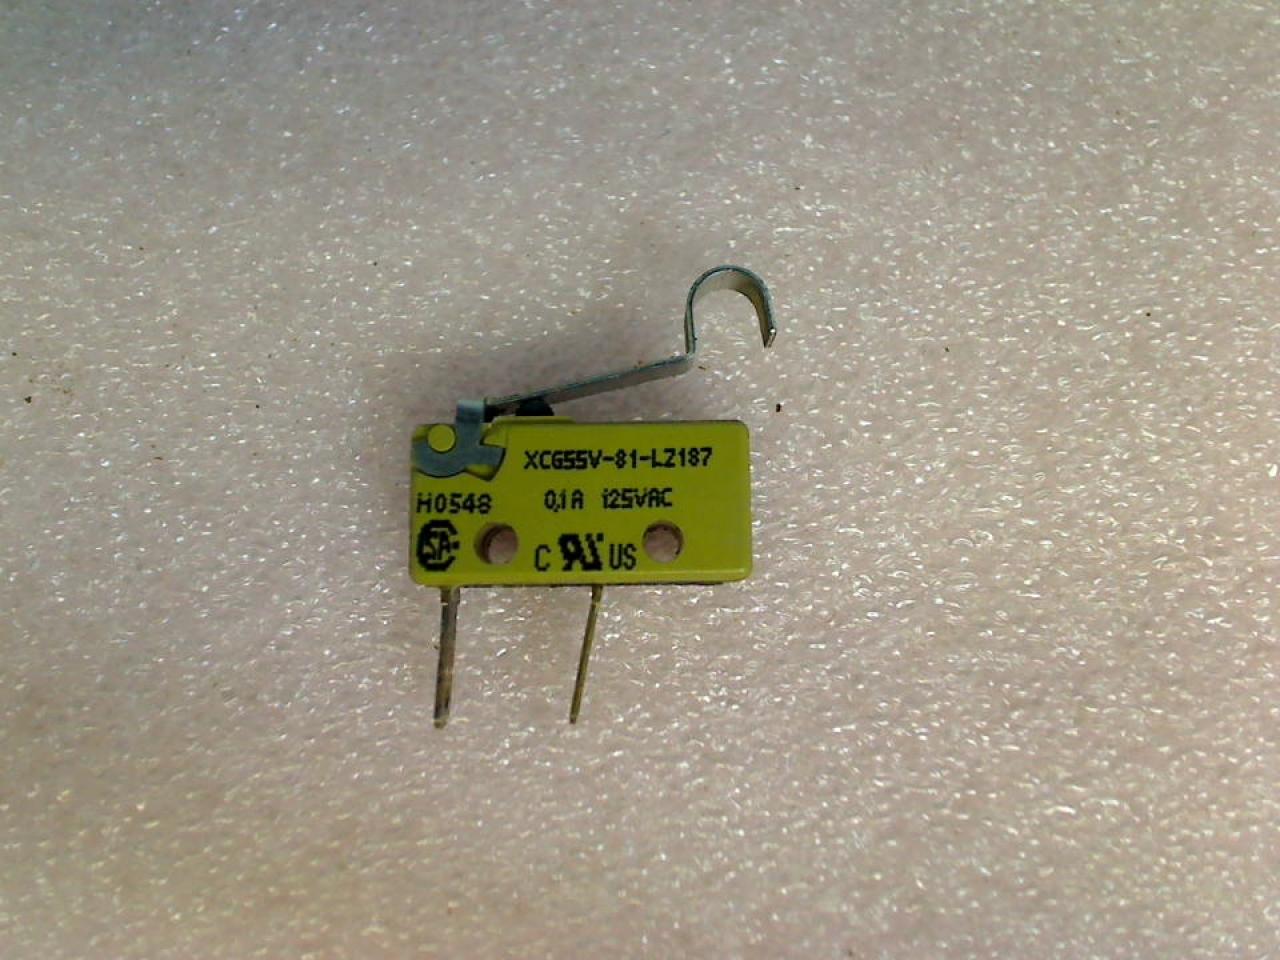 Micro Switch Sensor XCG55V-81-LZ187 Surpresso S60